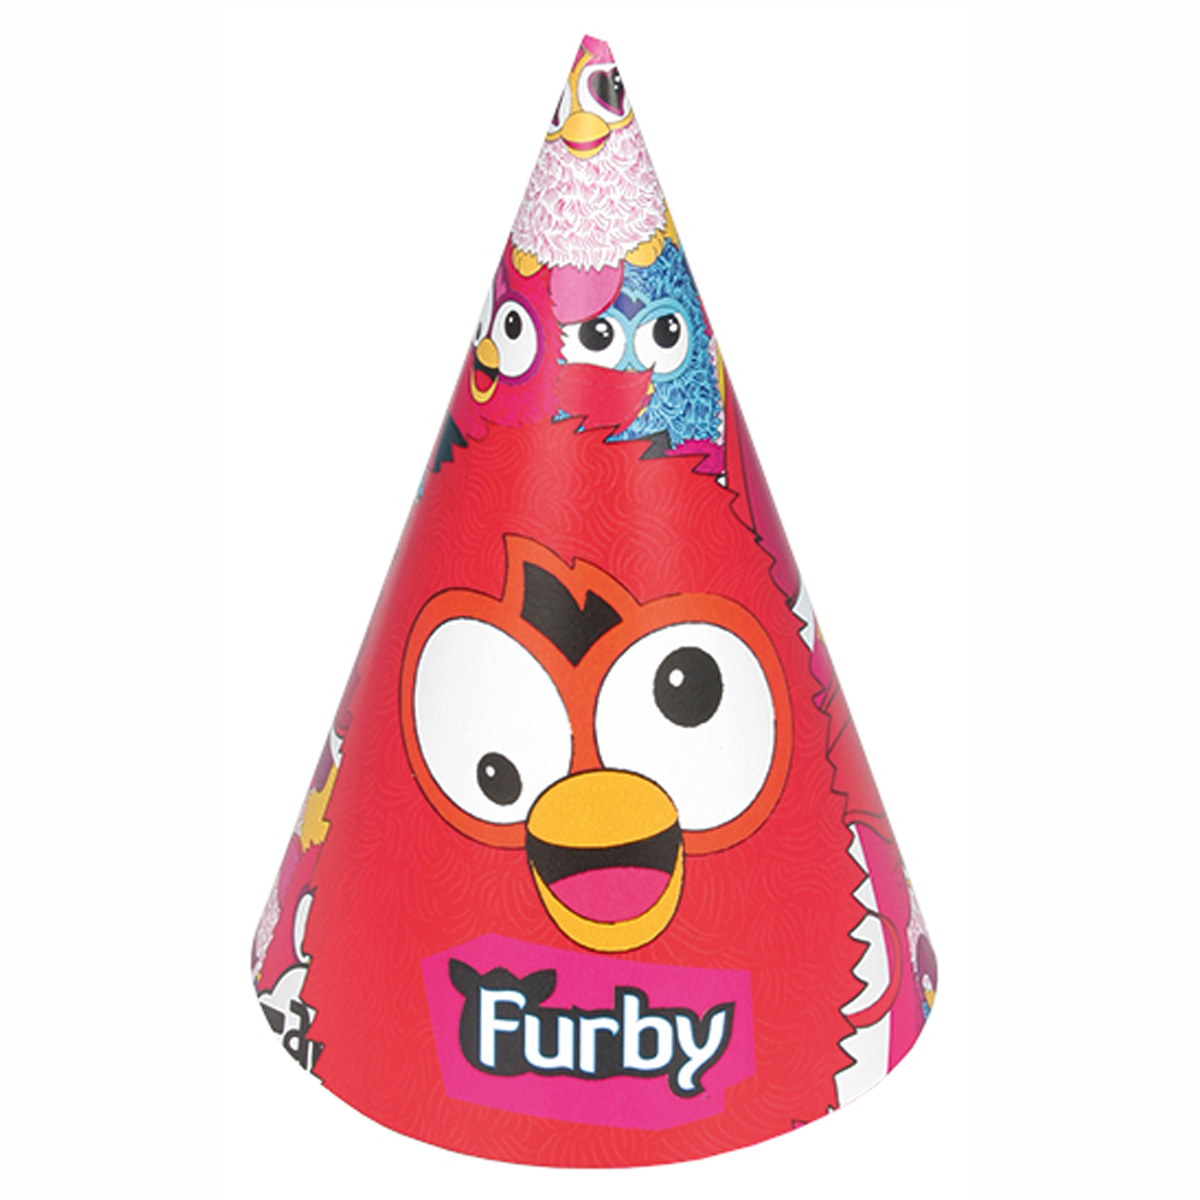 Furby Party Hats 6pcs Party Accessories - Party Centre - Party Centre